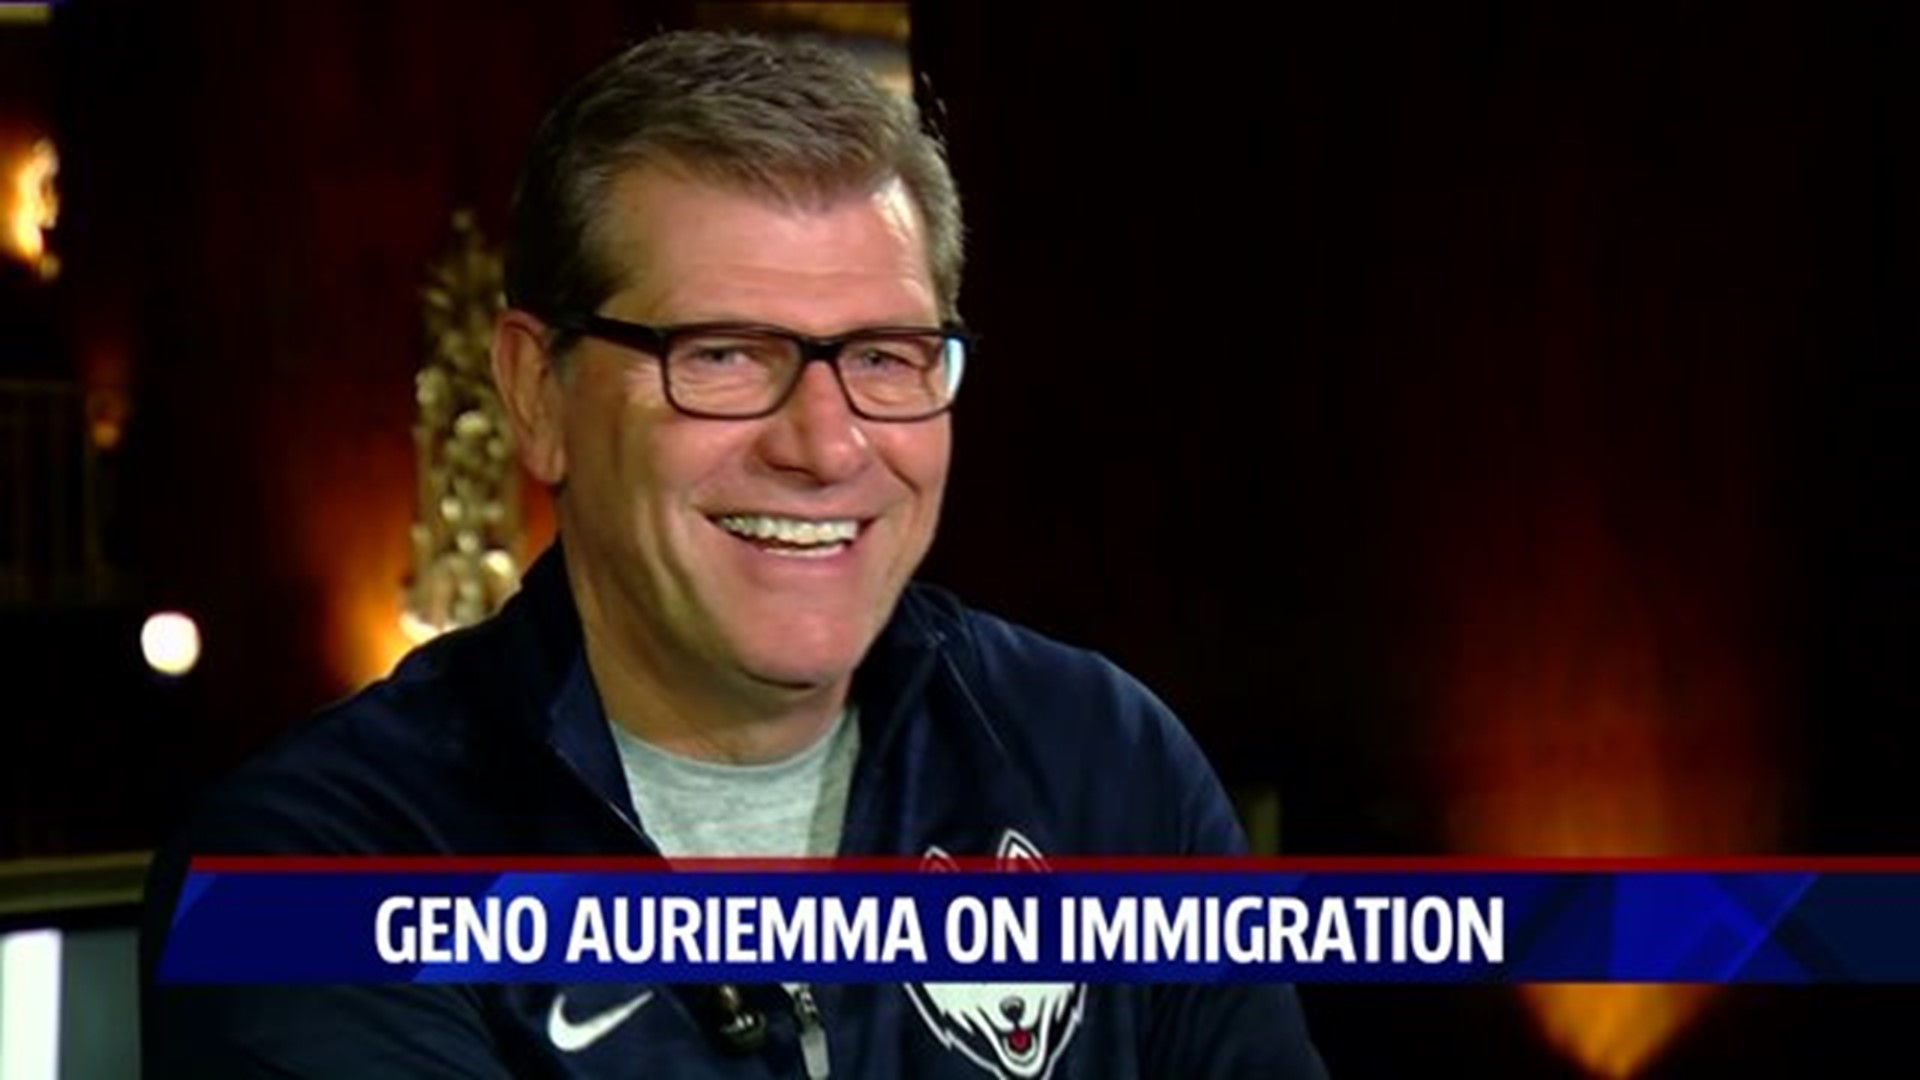 Auriemma on immigration